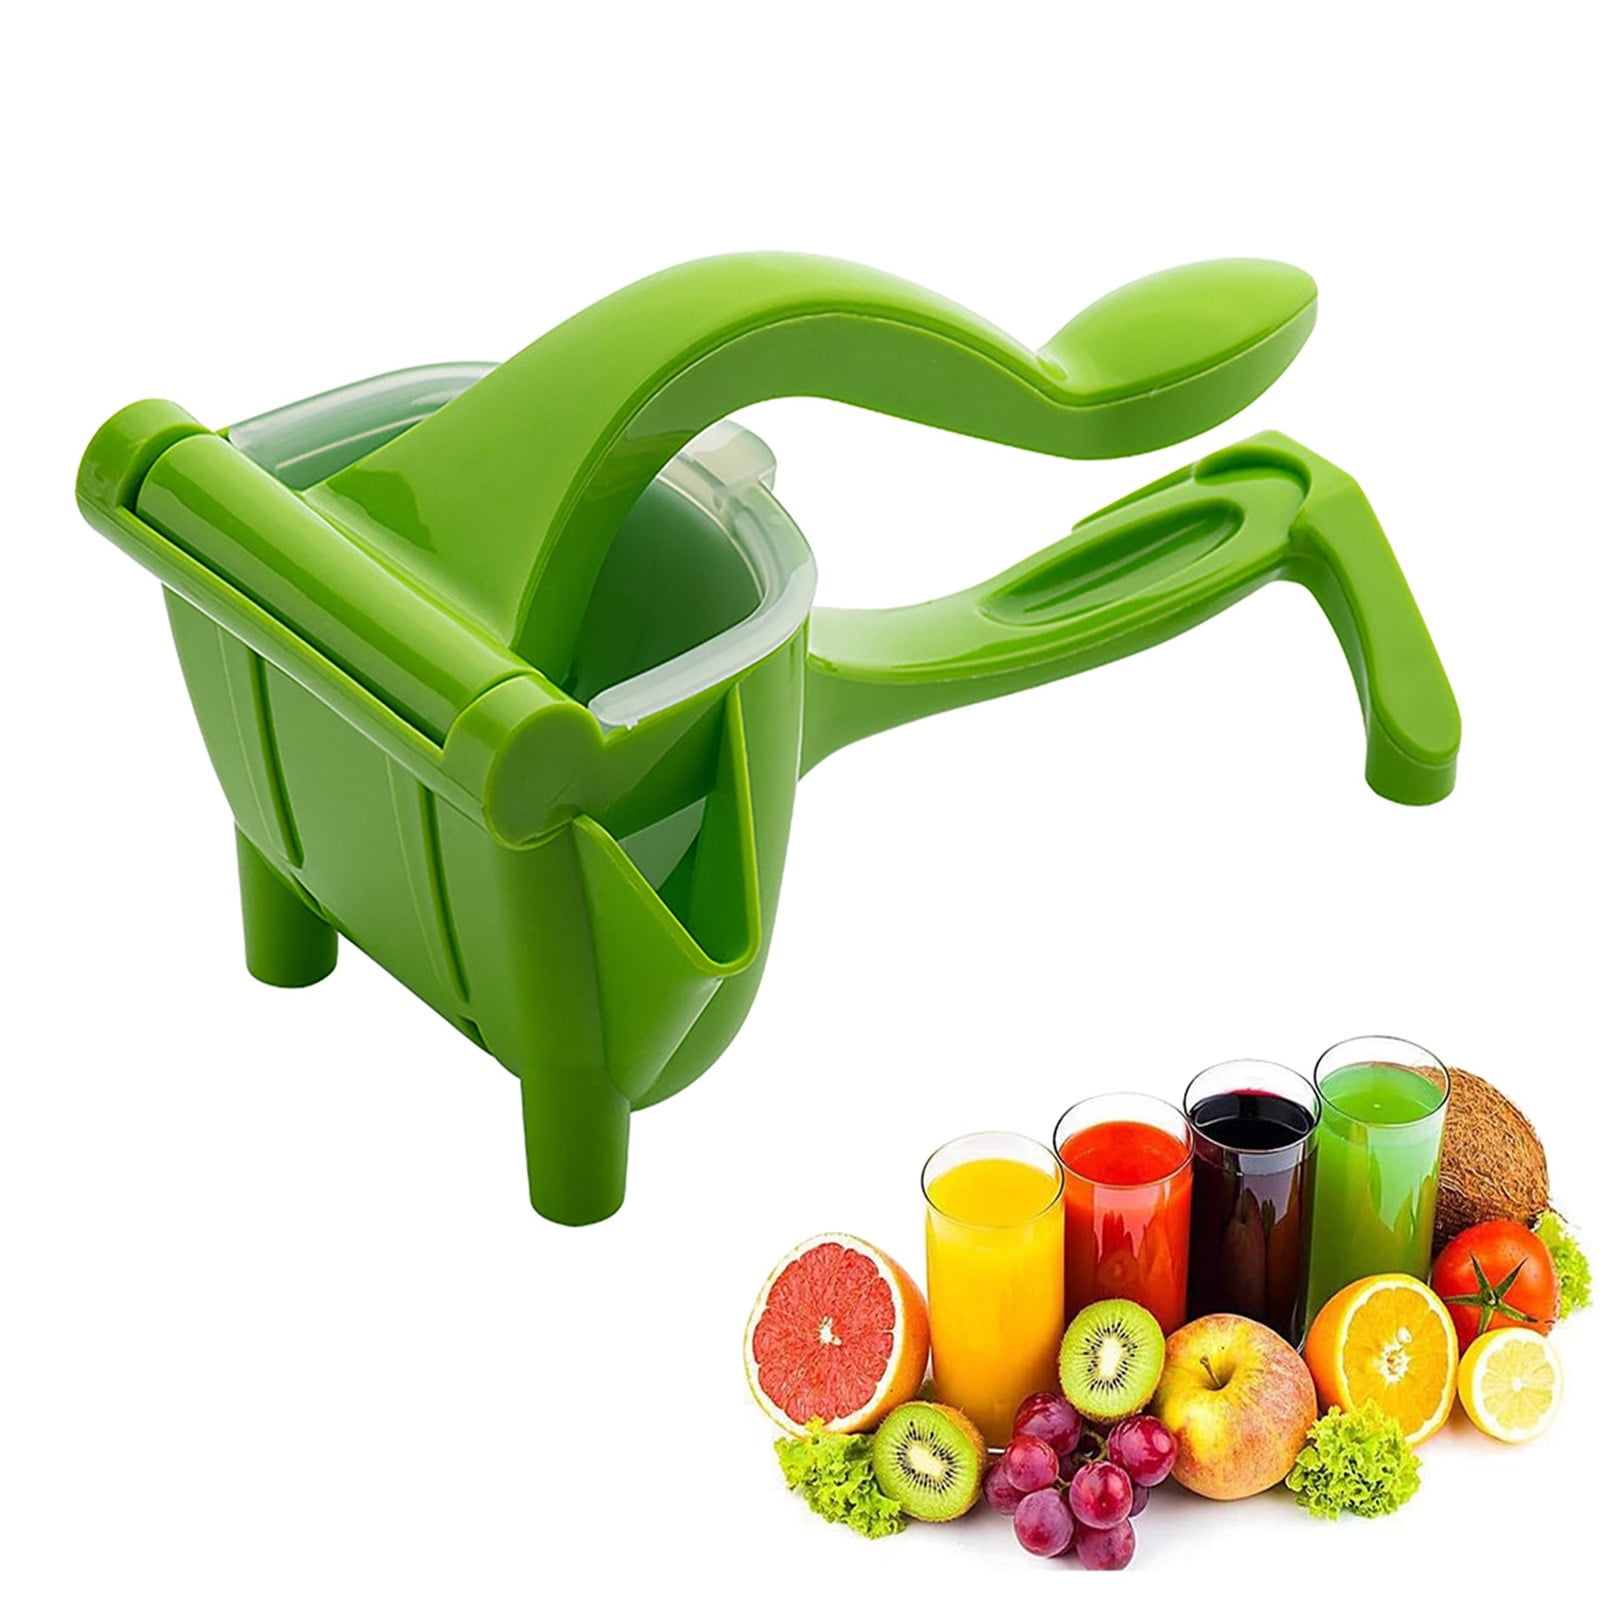 Heavy Duty Eco Juicer Manual Juice Press Squeezer Fruit Juicer Tools DHL DE 